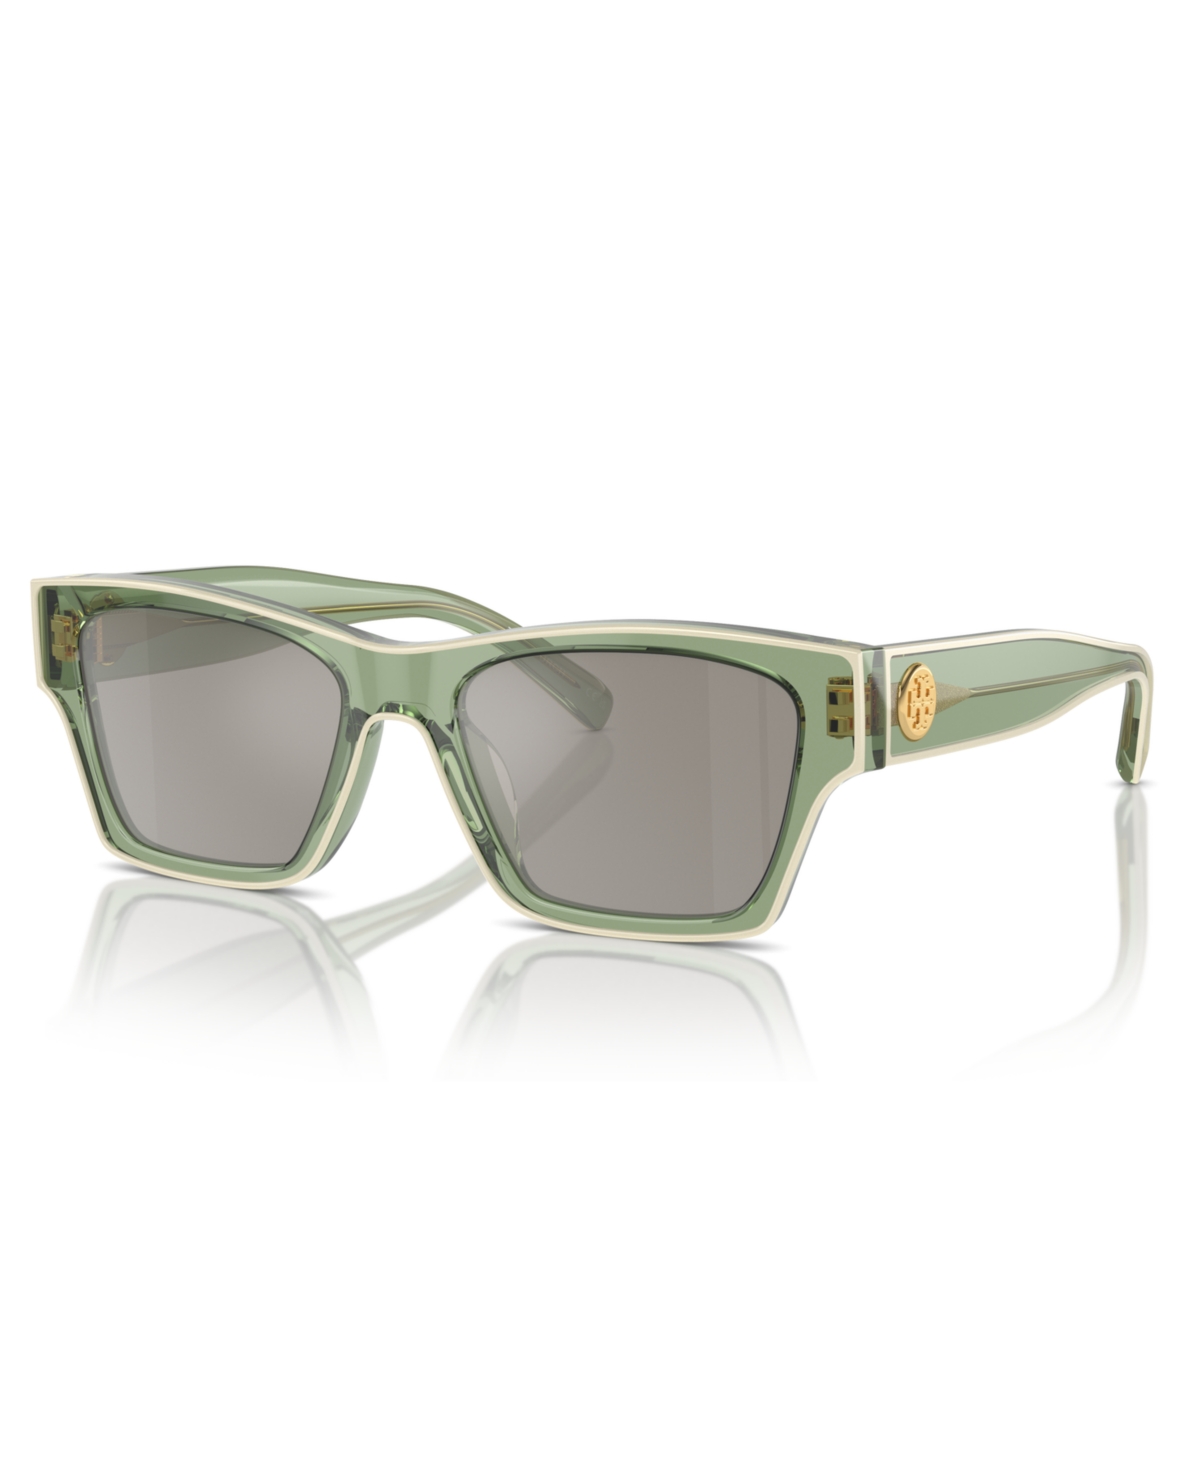 Women's Sunglasses, Ty7207U - Transparent Green and Ivory